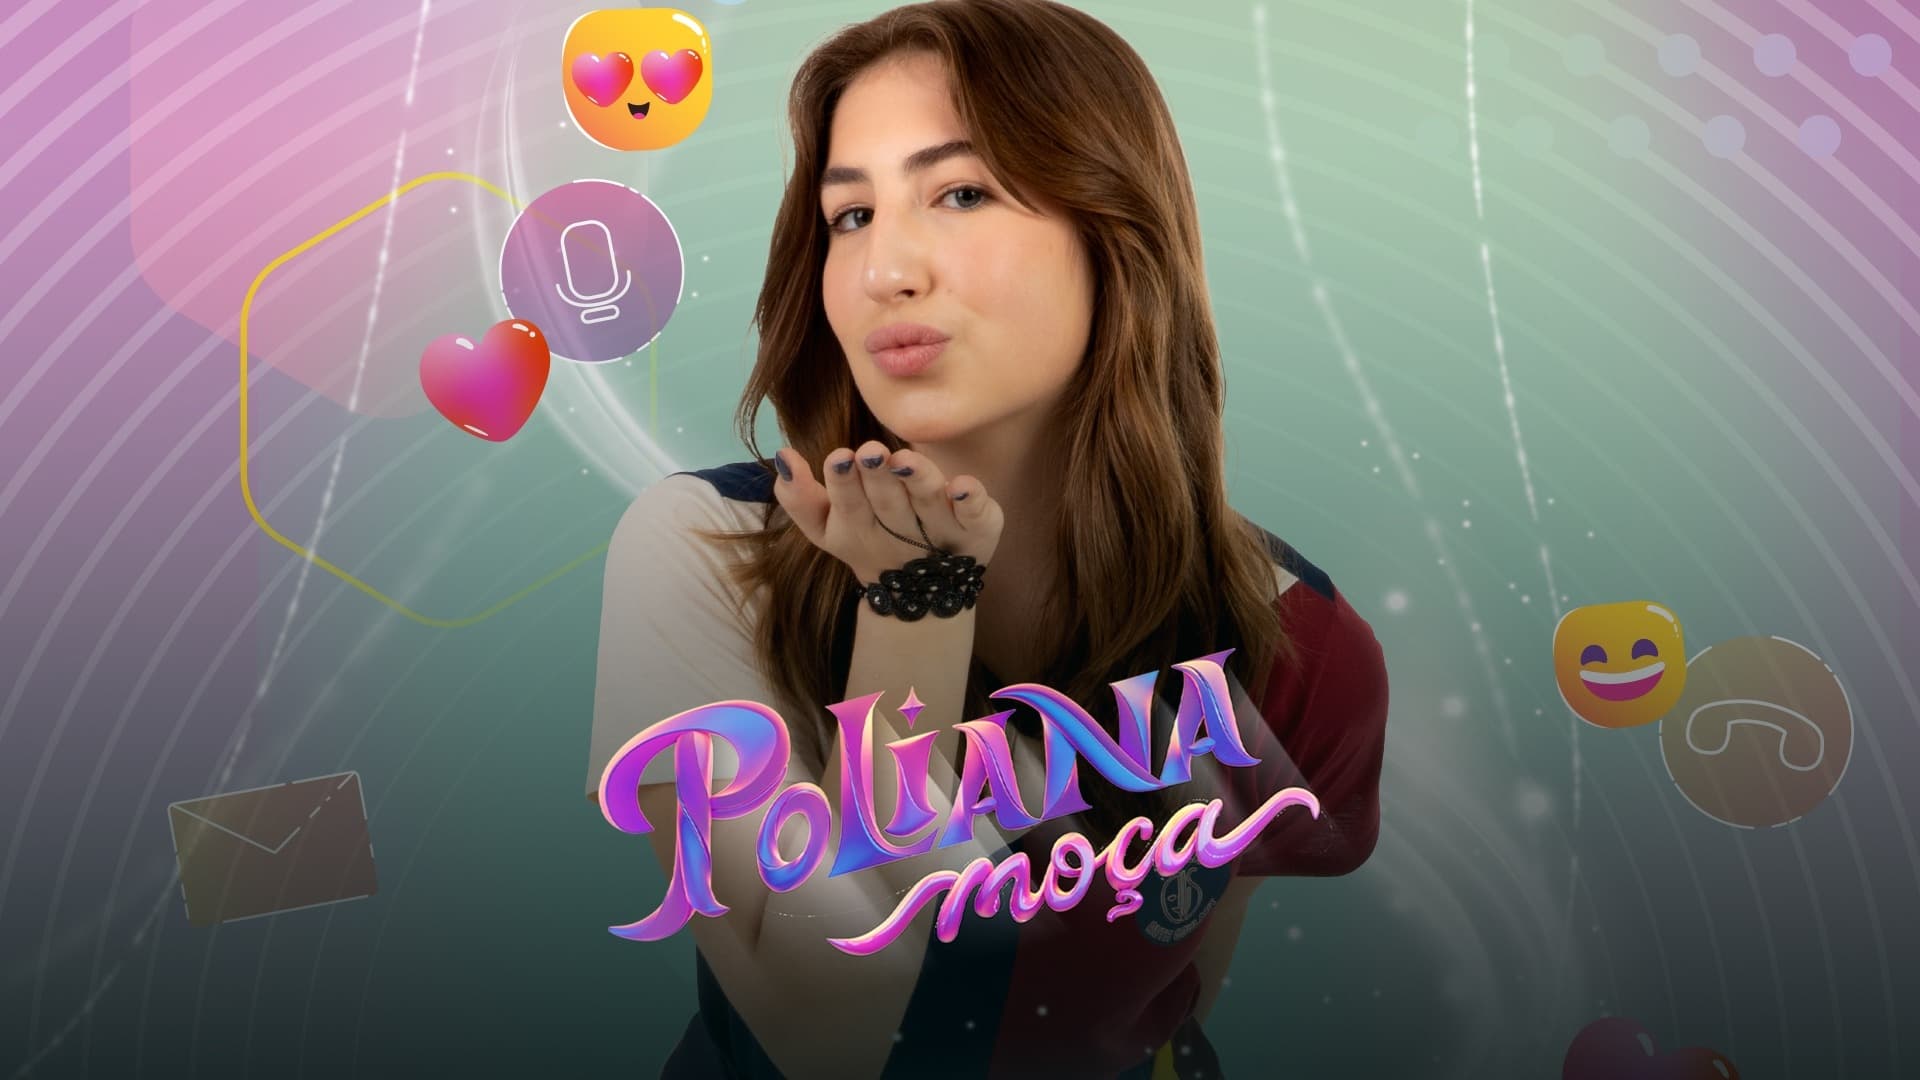 Poliana Moça - Season 1 Episode 9 : Episode 9